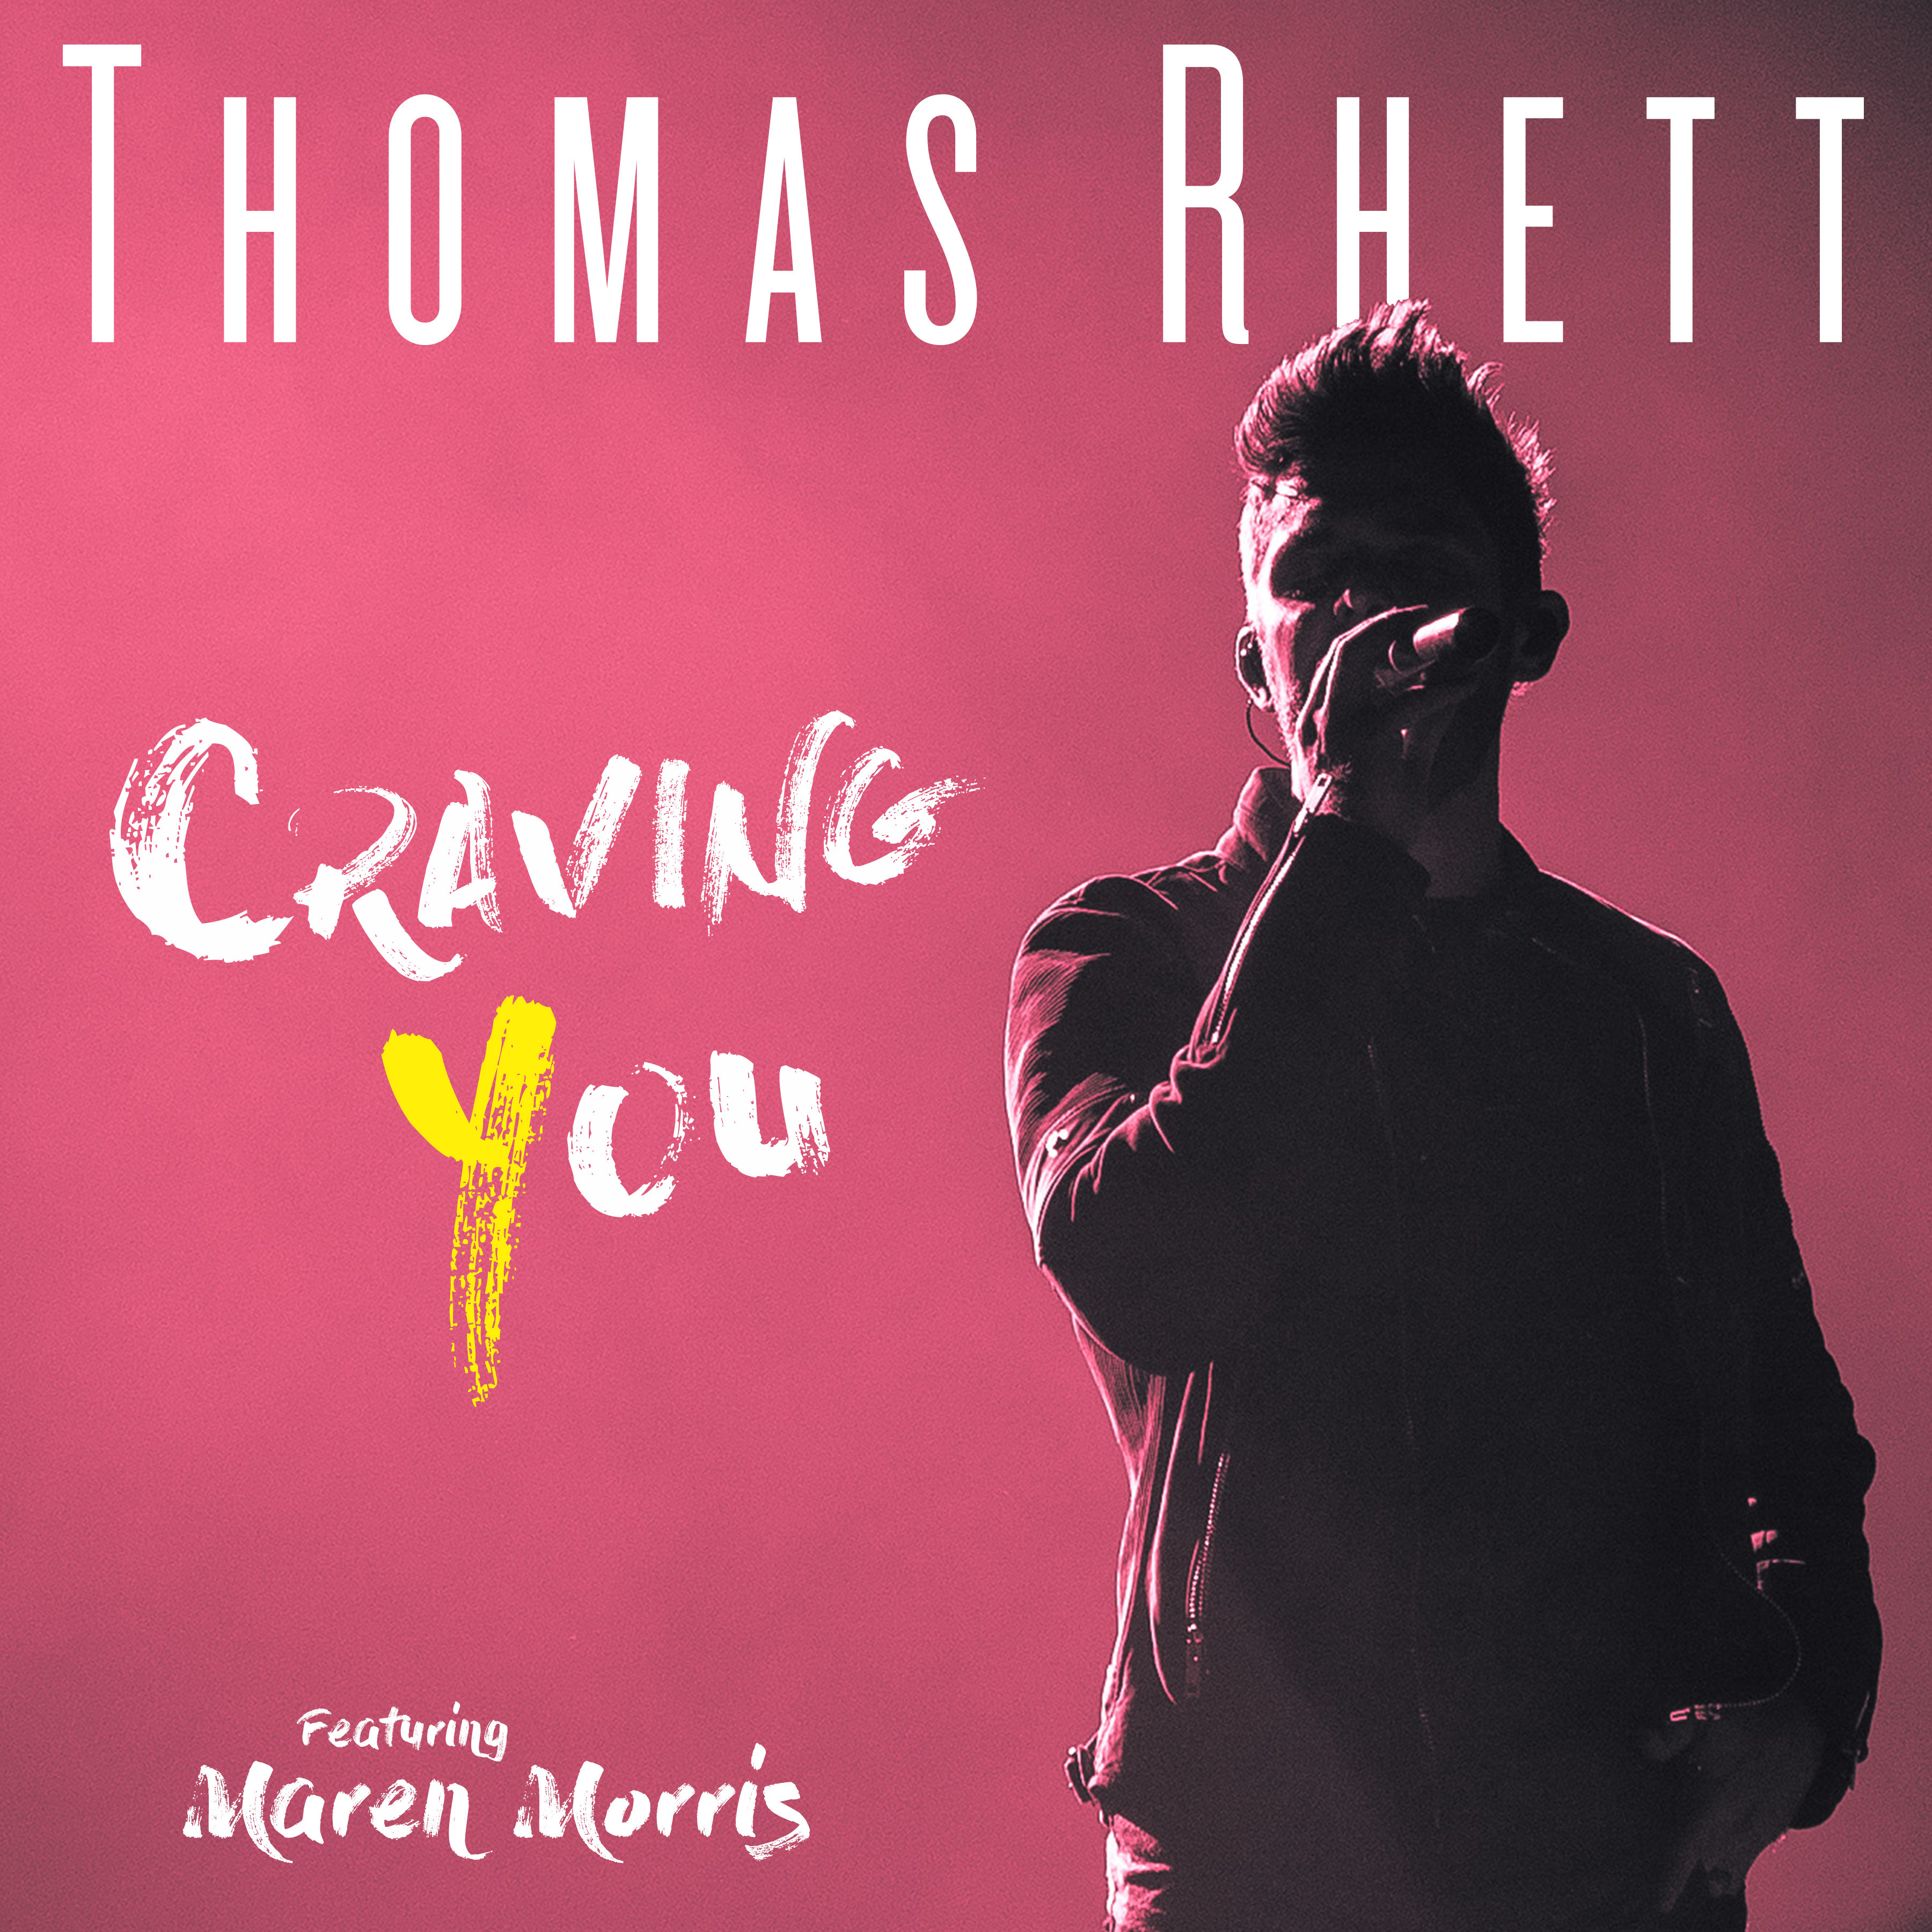 LISTEN: Thomas Rhett Drops New Single “Craving You” with Maren Morris